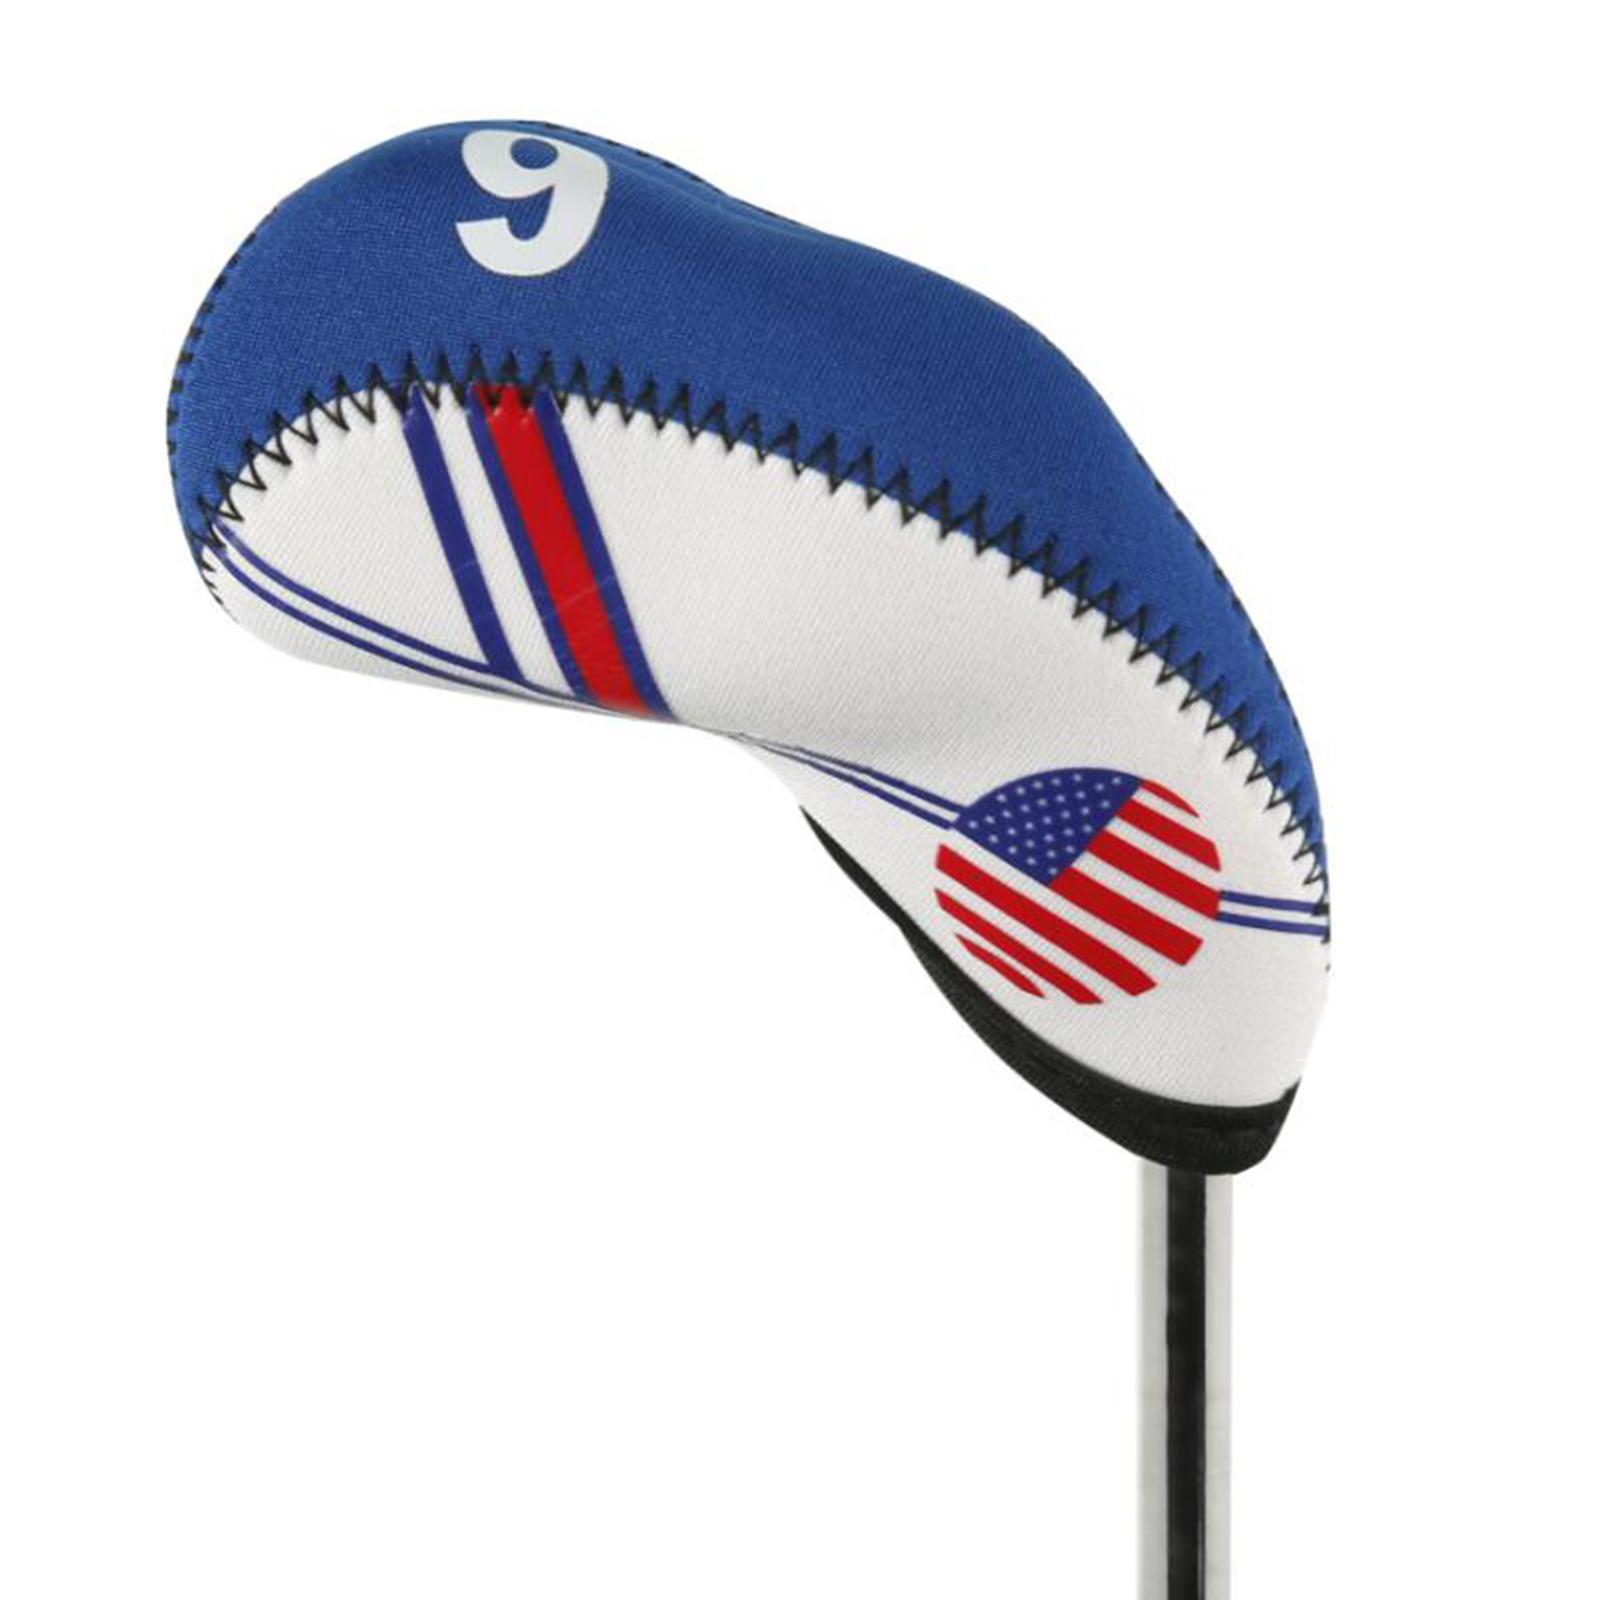 10x Golf Iron Headcover Set Golf Club Head Cover Golfer Gift Fits All Brands Royal Blue